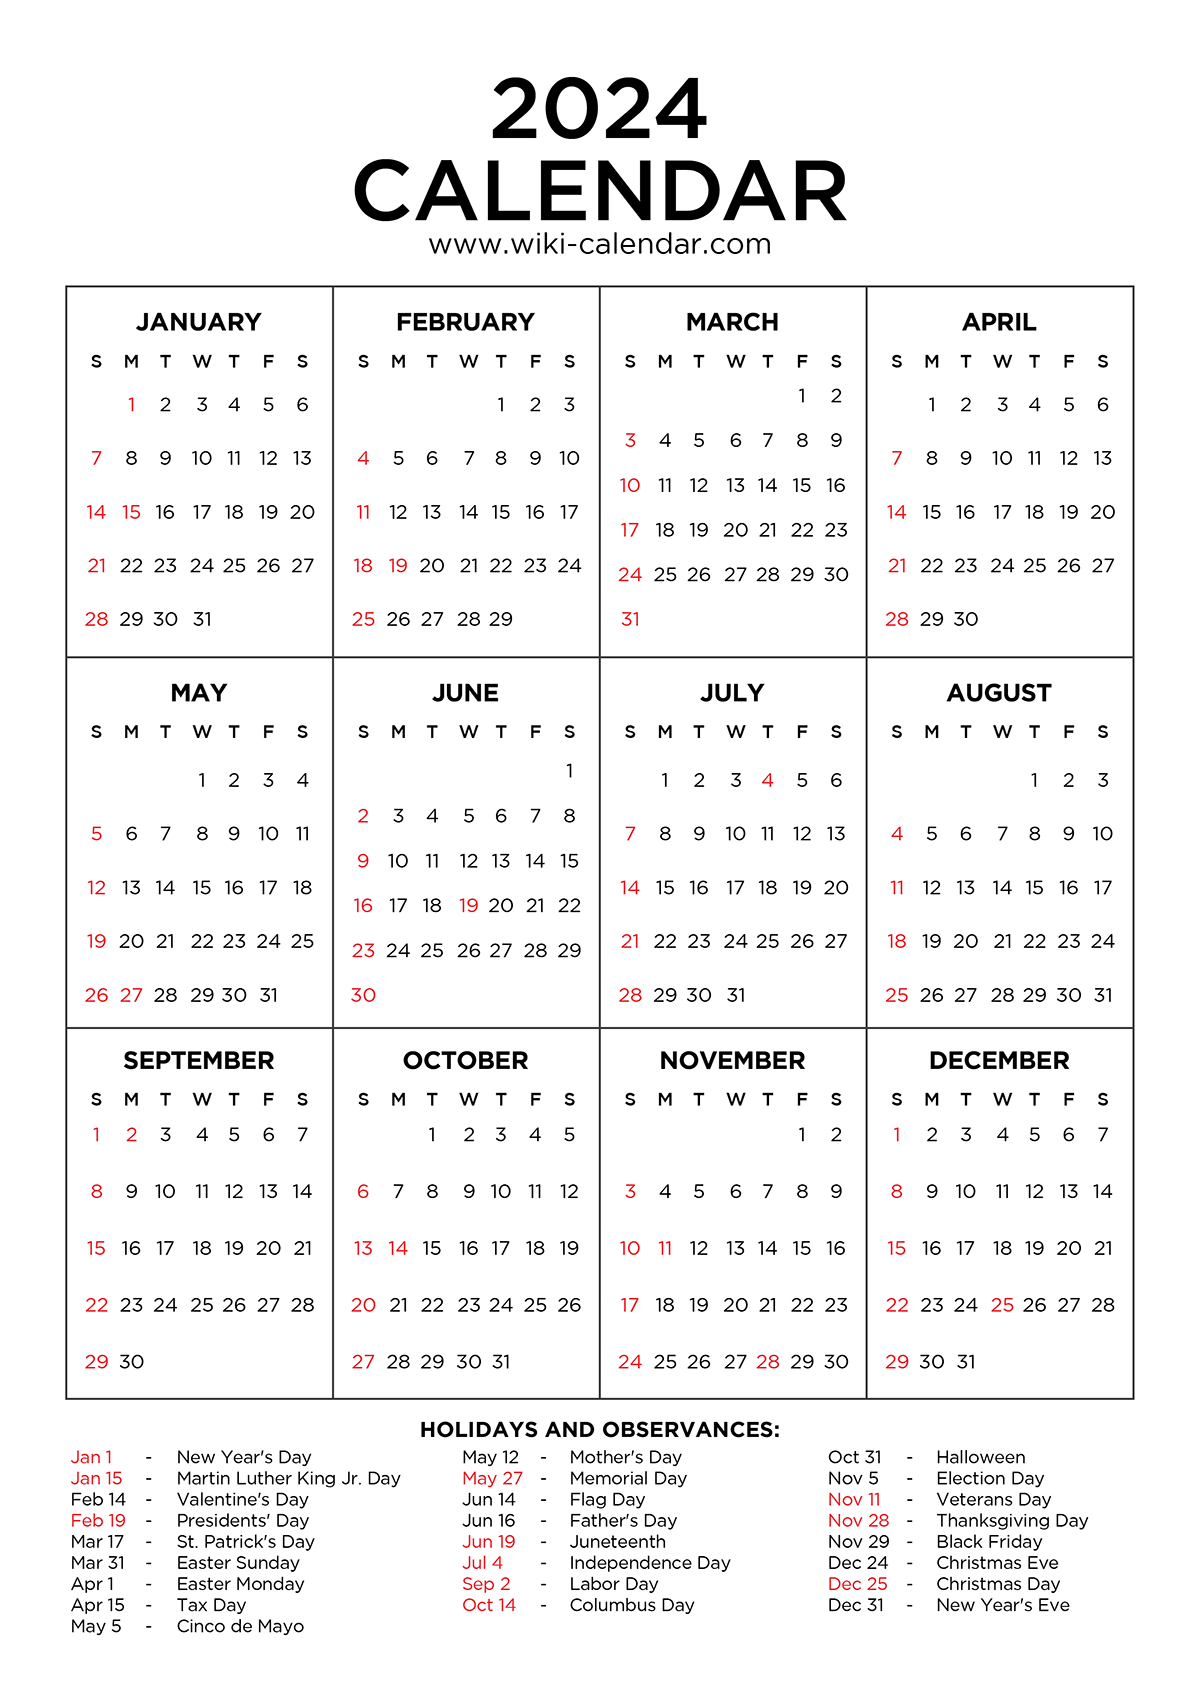 Year 2024 Calendar Printable With Holidays - Wiki Calendar | Printable Calendar 2024 With Us Holidays